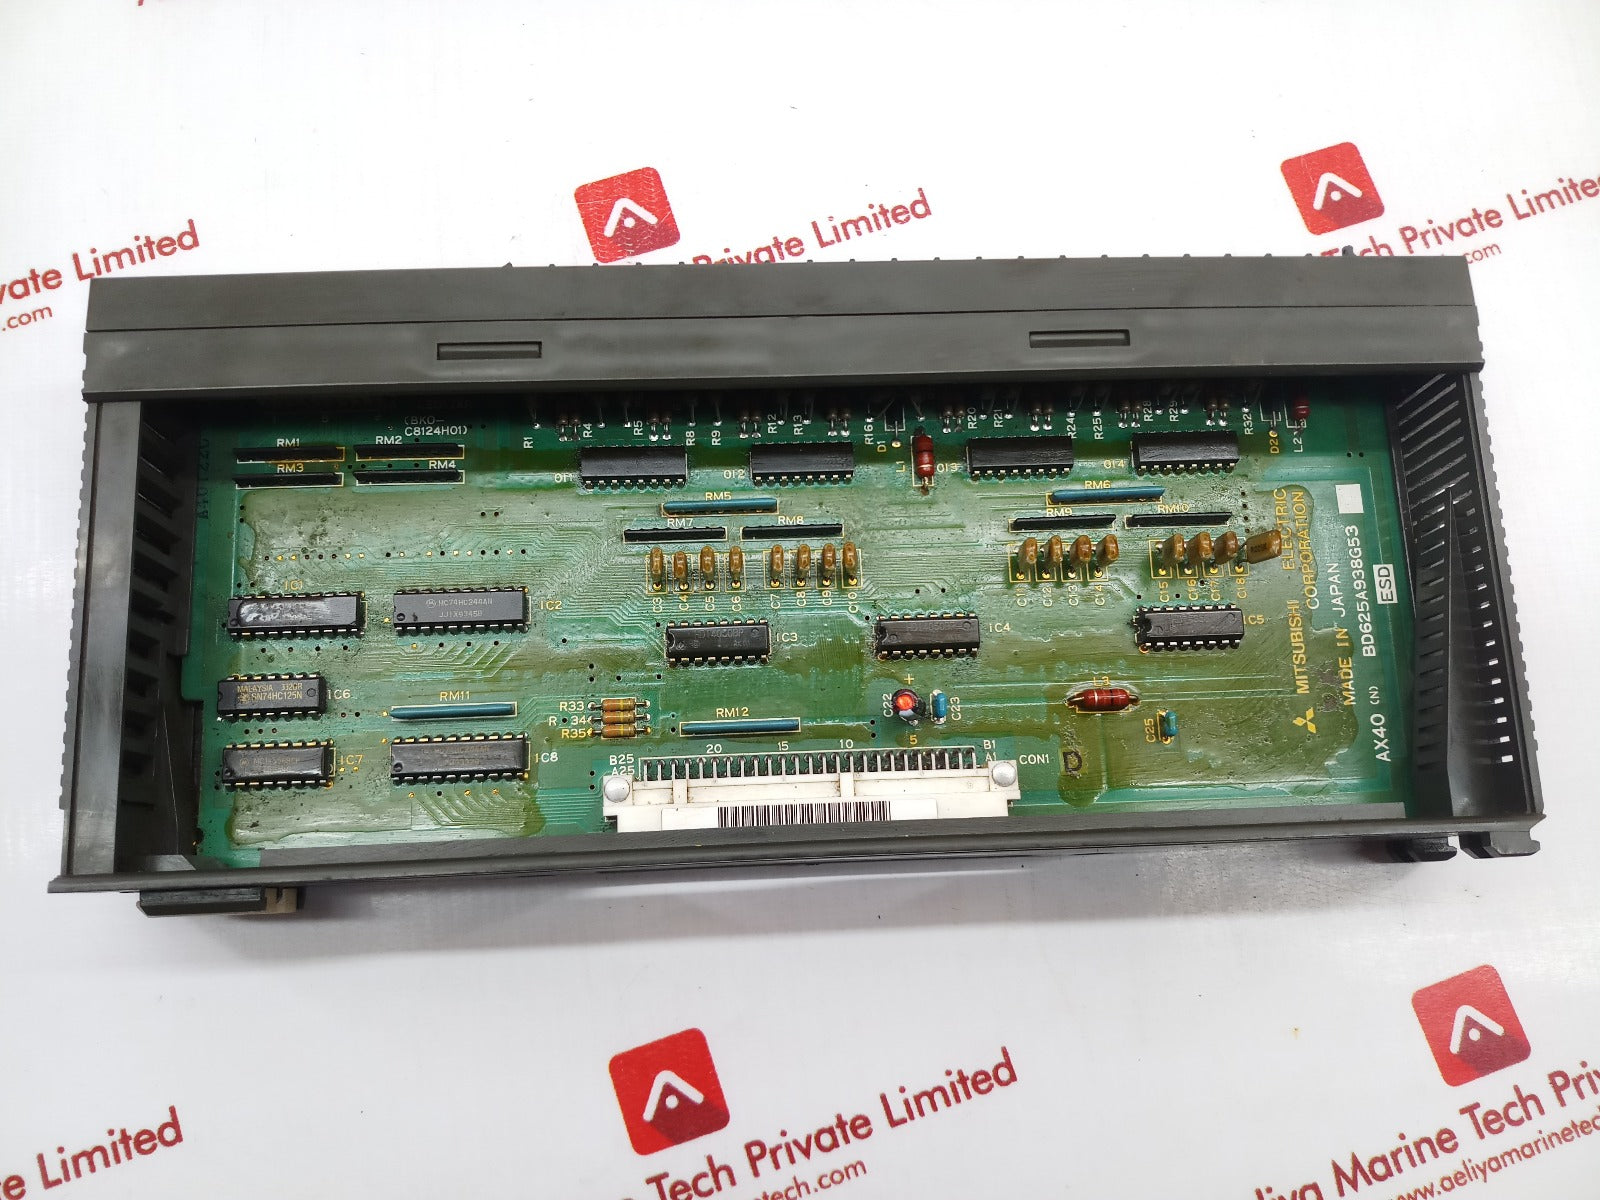 Mitsubishi Melsec Ax40 Bd625A938G53 Programmable Controller